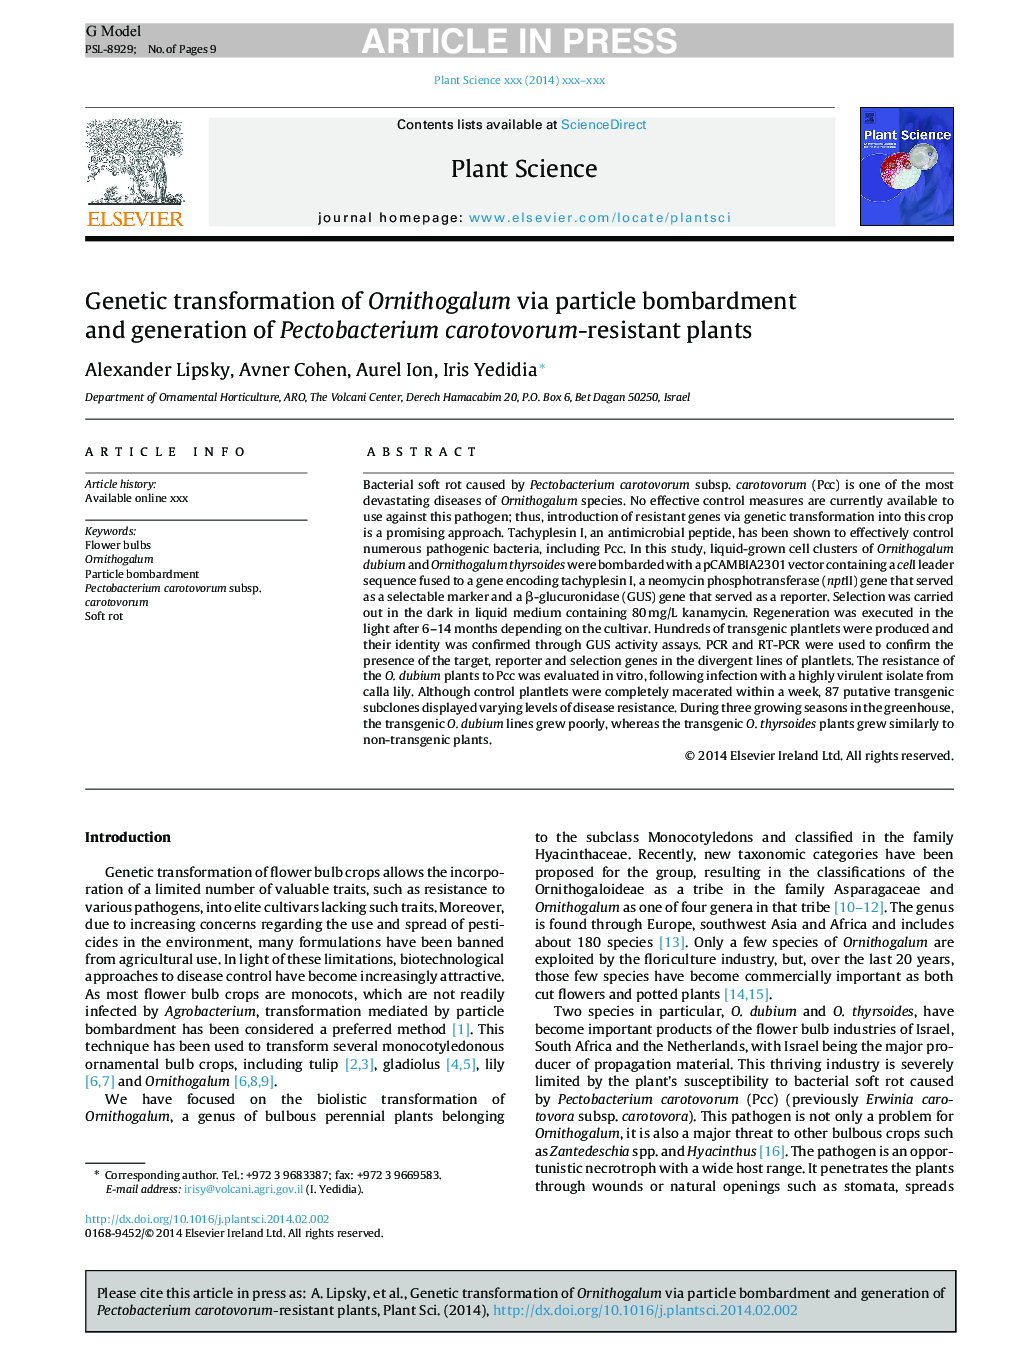 Genetic transformation of Ornithogalum via particle bombardment and generation of Pectobacterium carotovorum-resistant plants